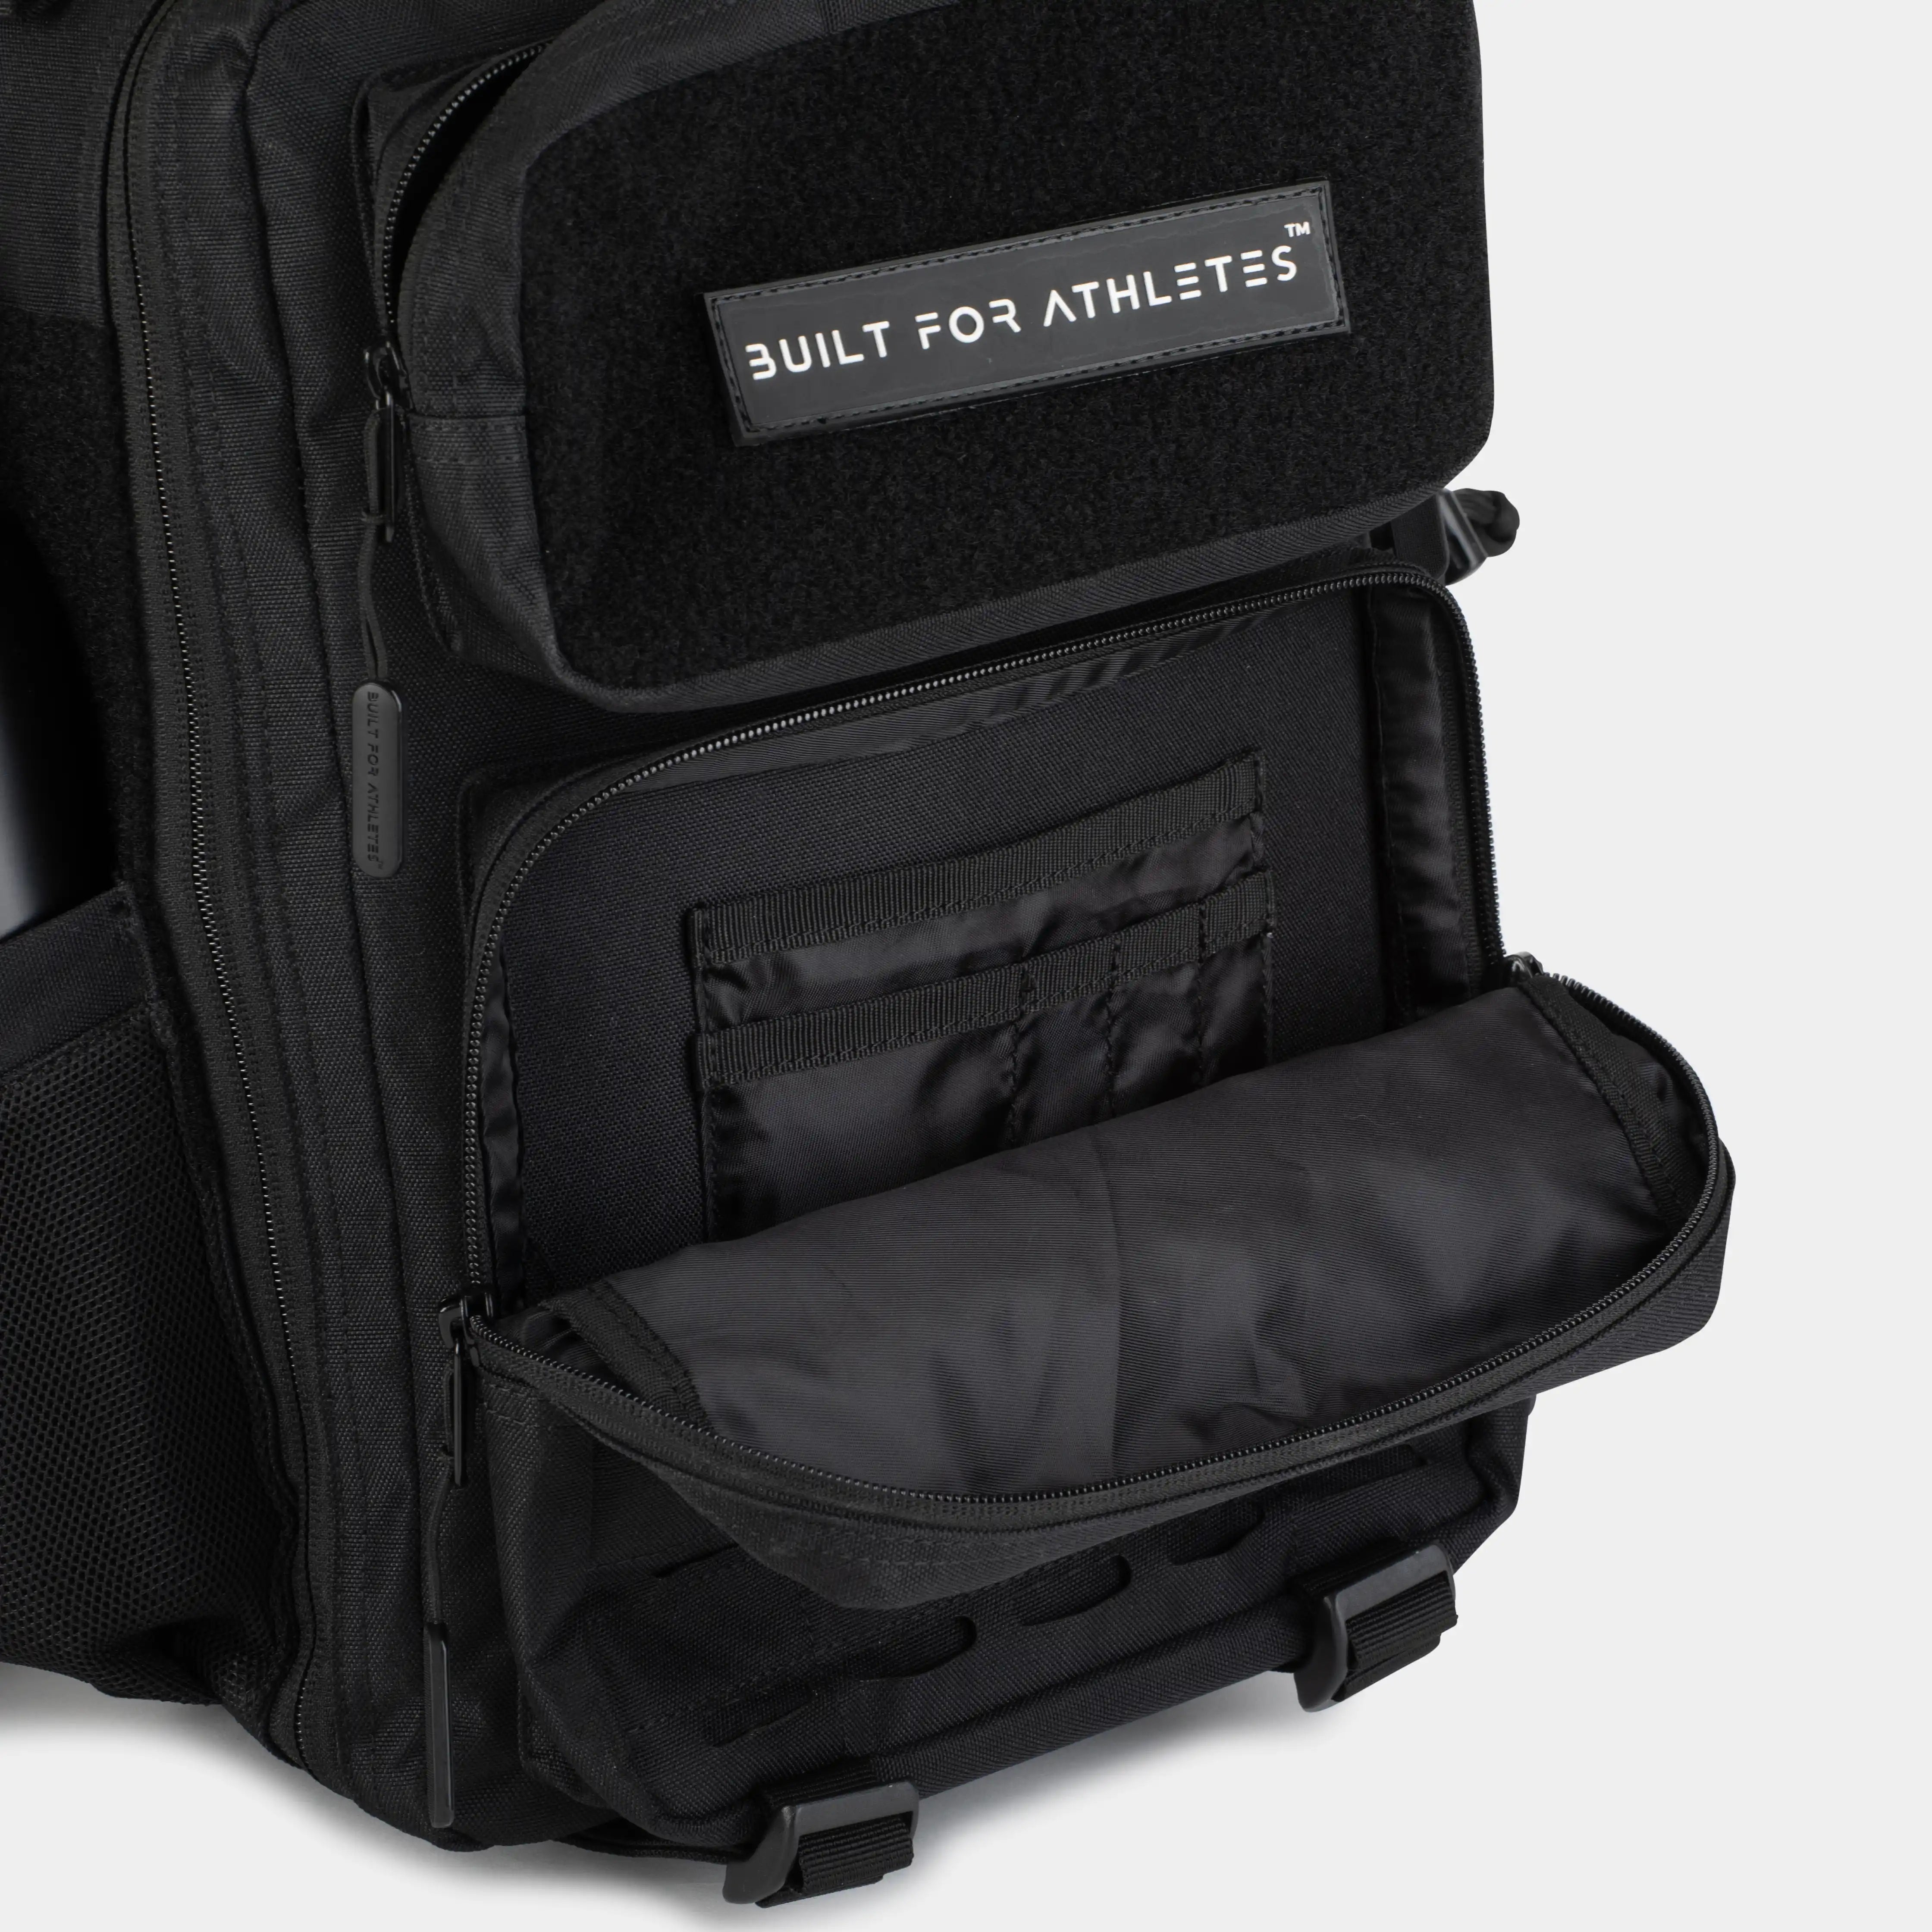 Built for Athletes Backpacks Small 15L Black Gym Backpack